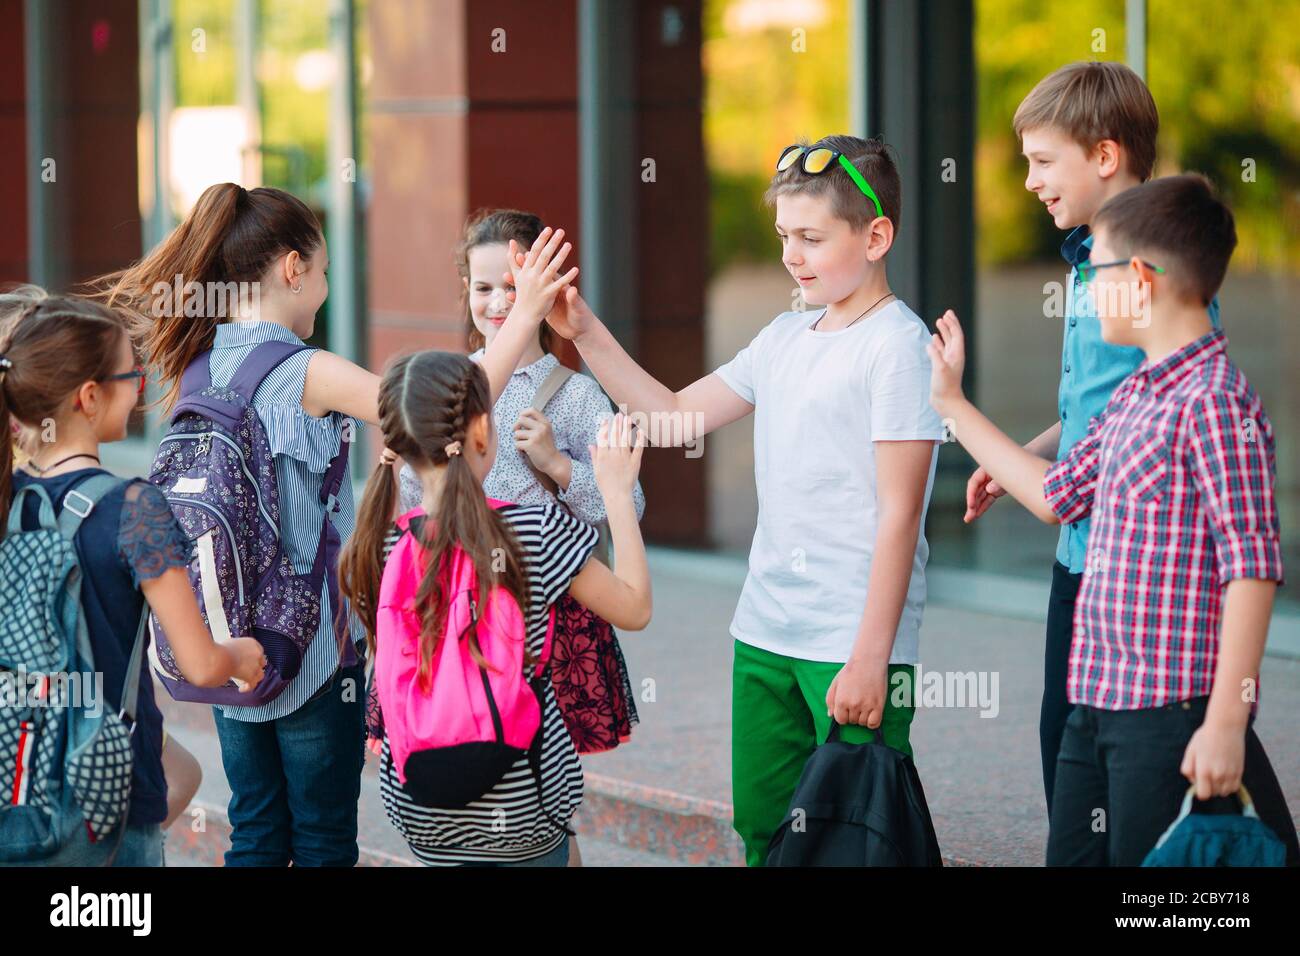 Schoolmates go to school. Students greet each other Stock Photo Alamy